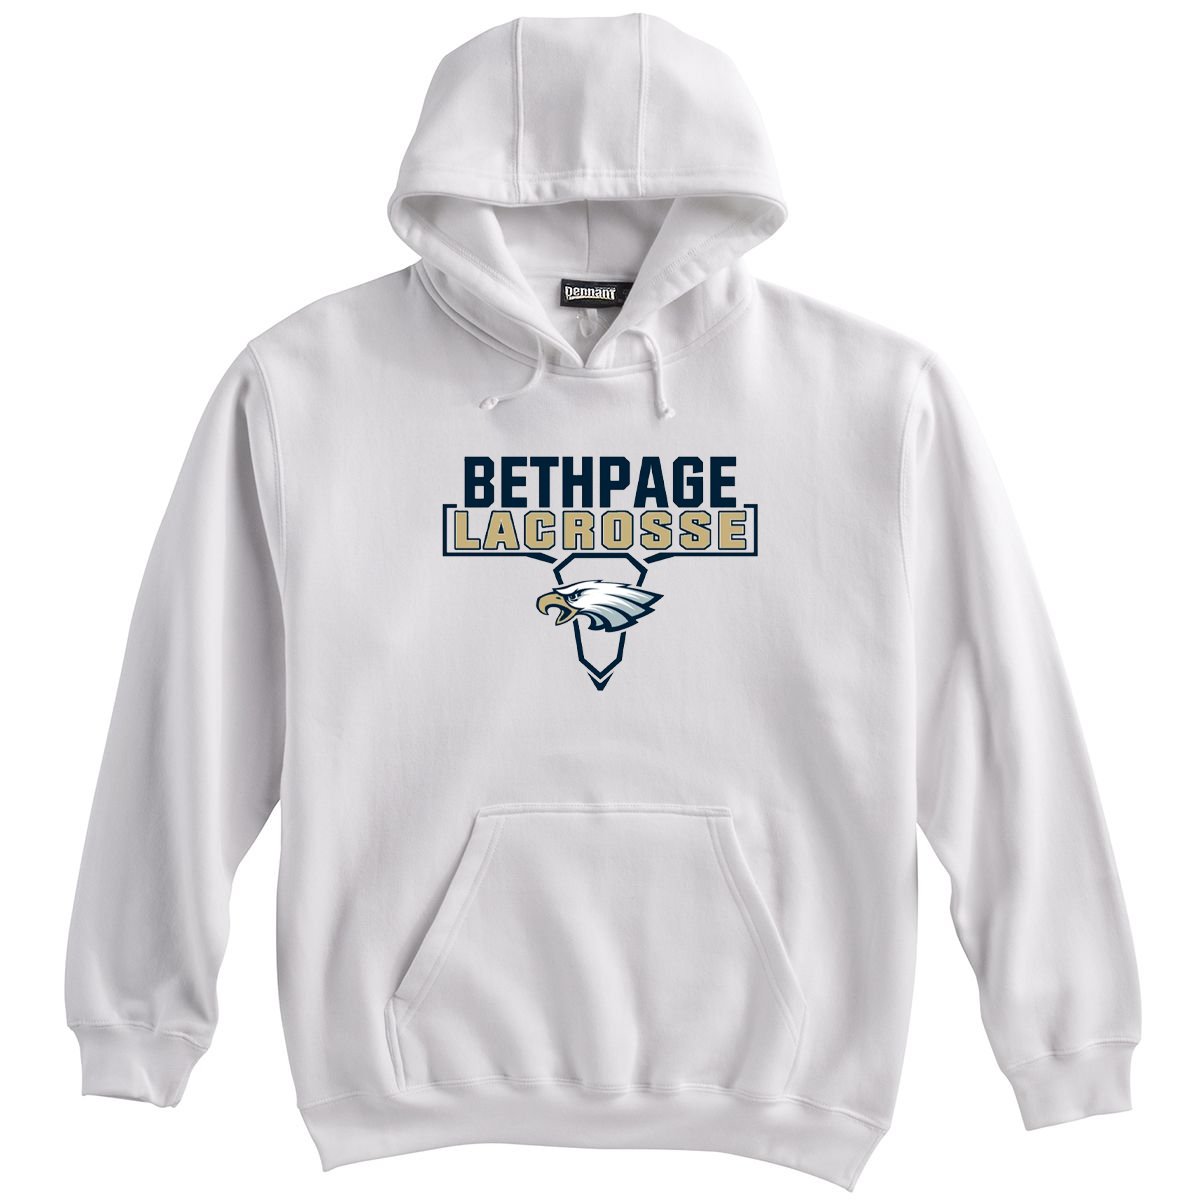 Bethpage Lacrosse Sweatshirt